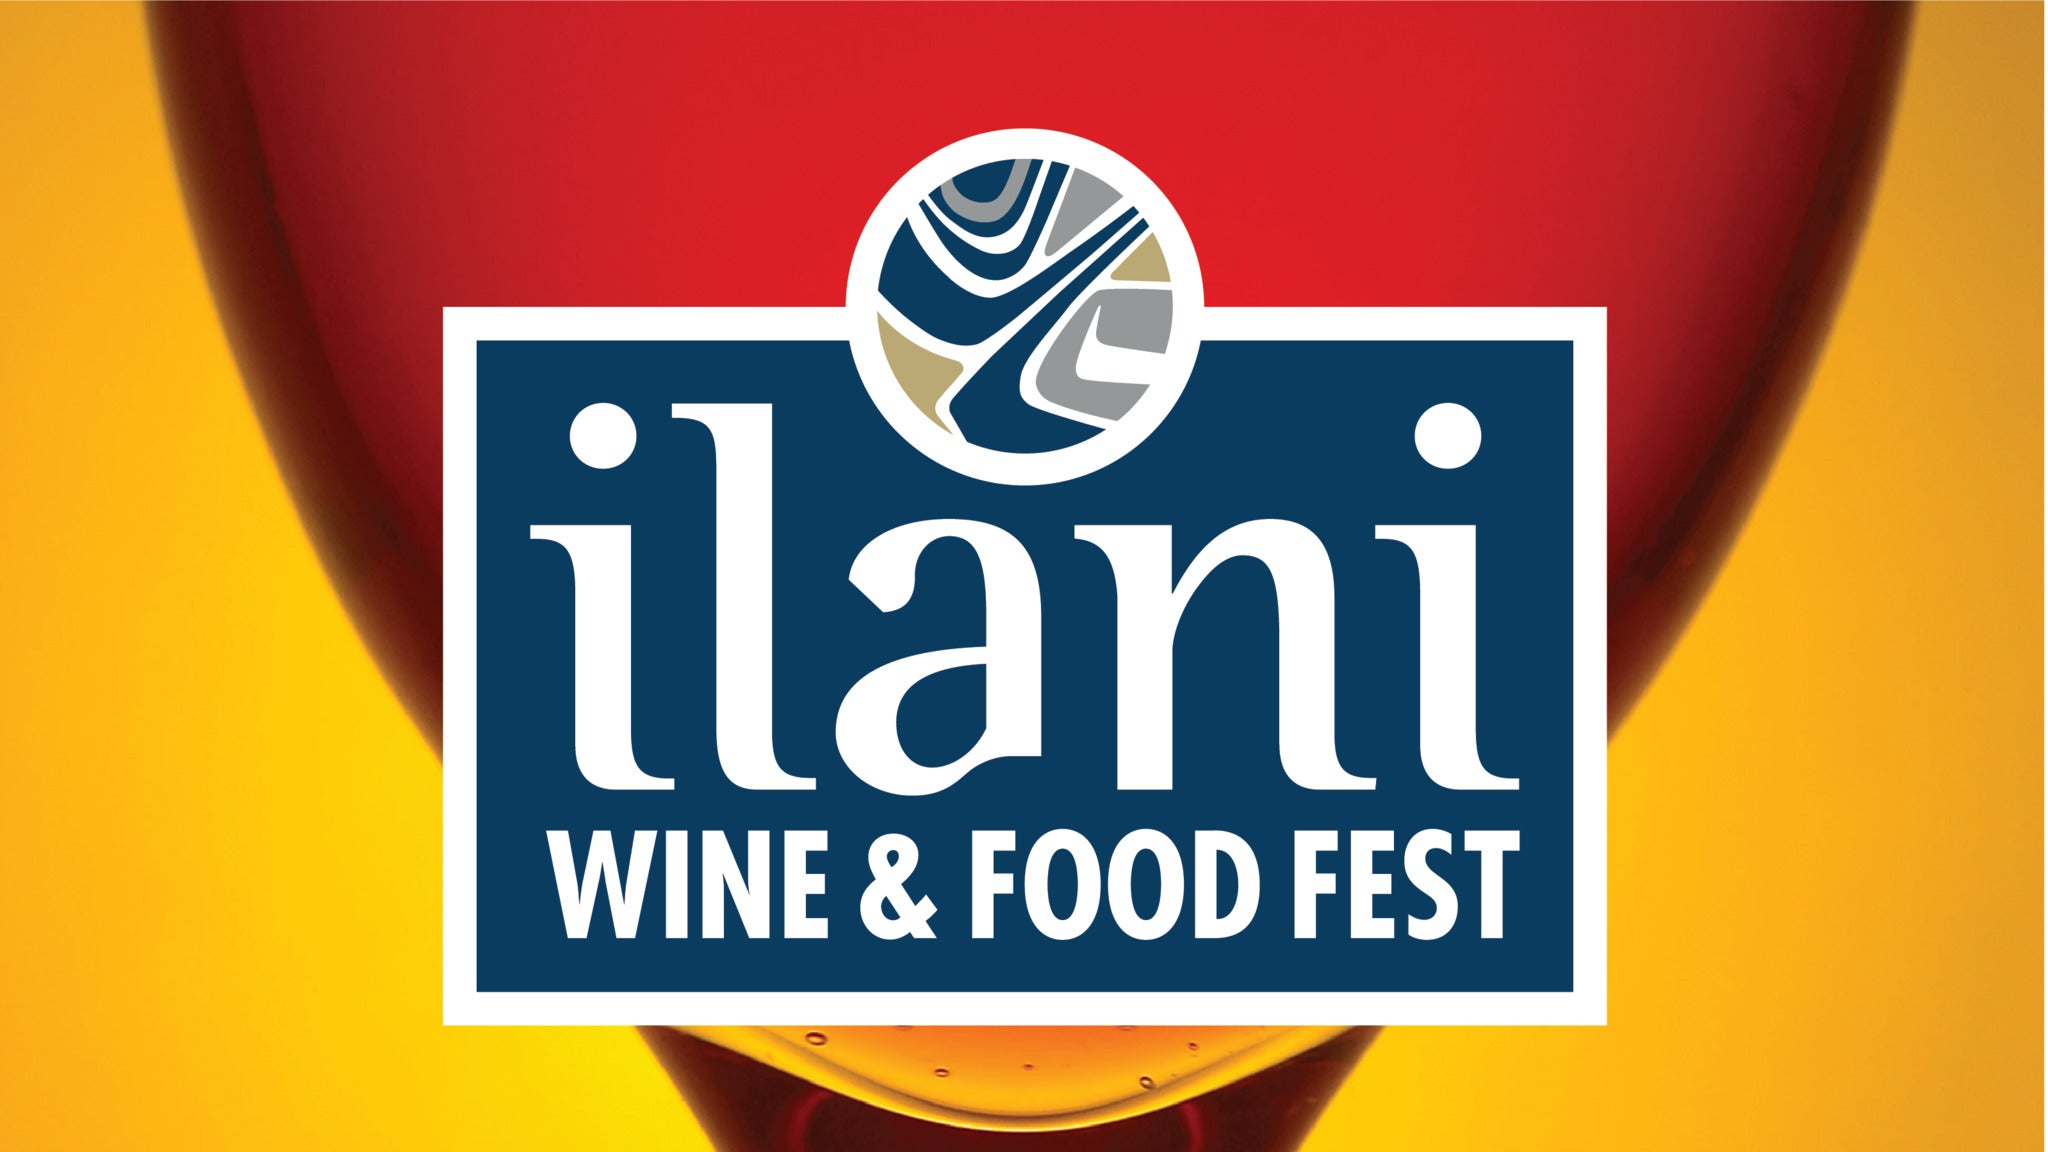 ilani Wine & Food Fest Fri/Sat Grand Tasting Pass in Ridgefield promo photo for Standard presale offer code